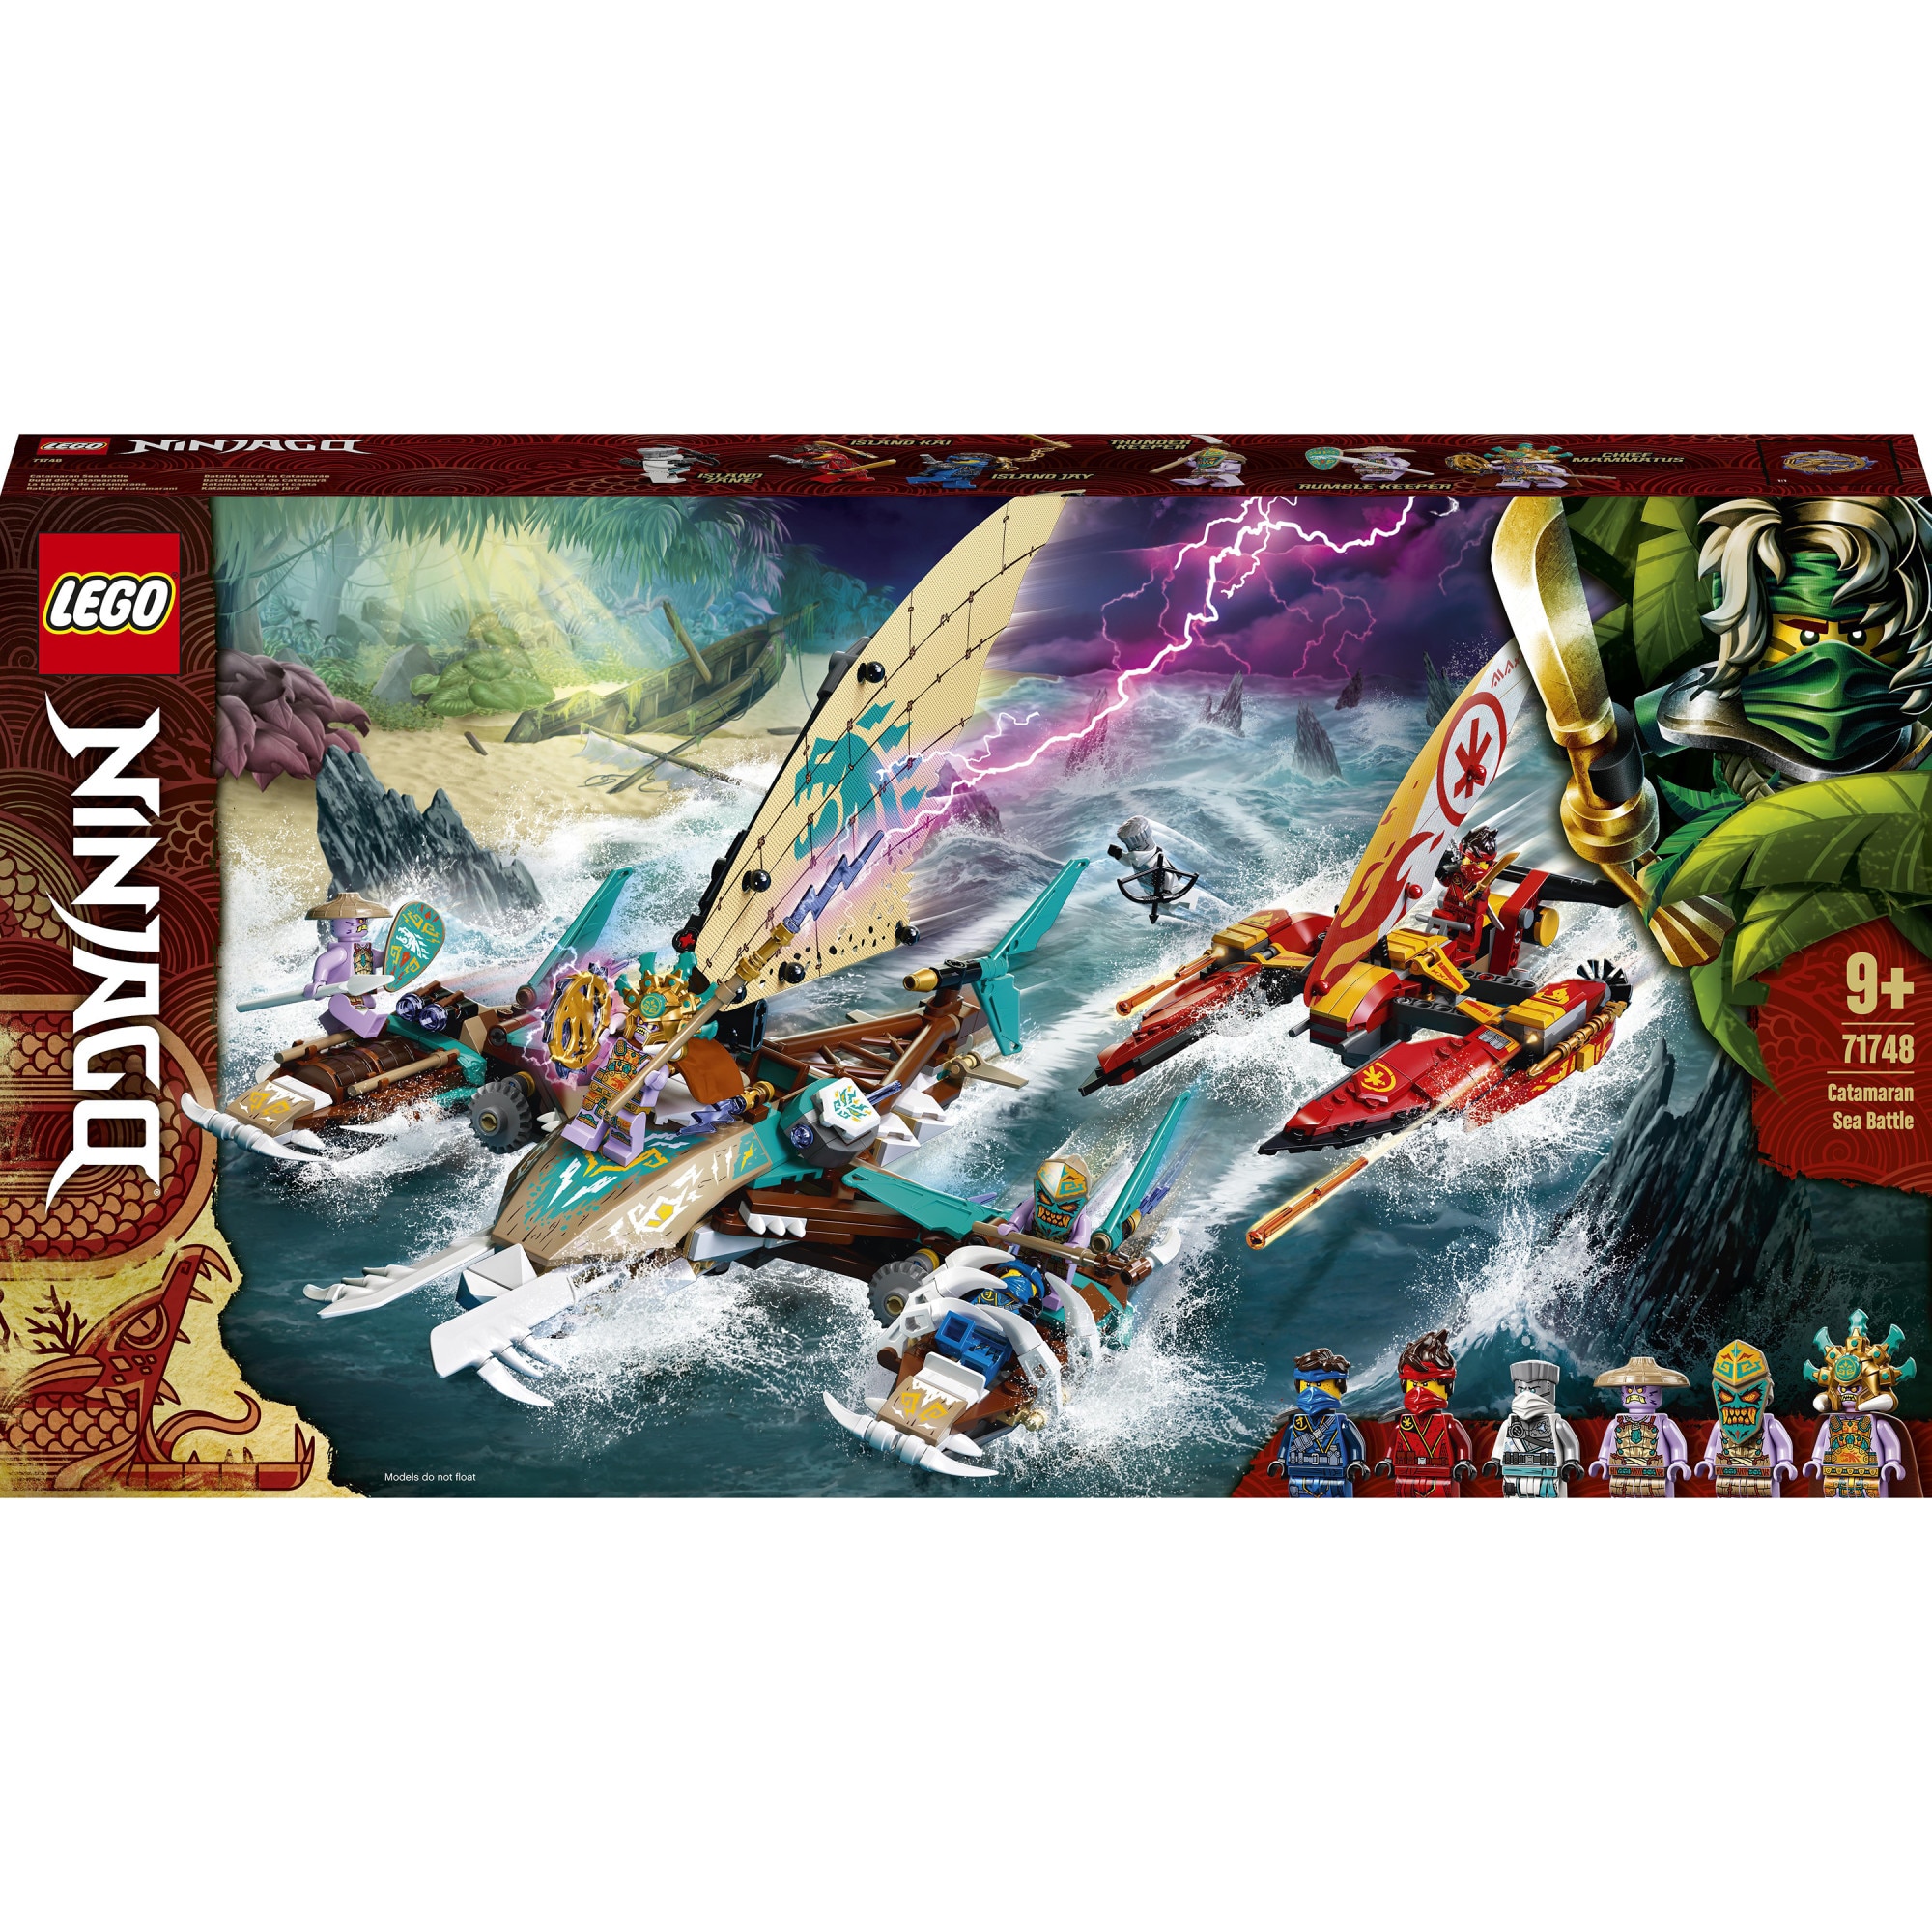 put forward Disposed Funny LEGO NINJAGO - Lupta pe mare cu catamaranul 71748, 780 piese - eMAG.ro